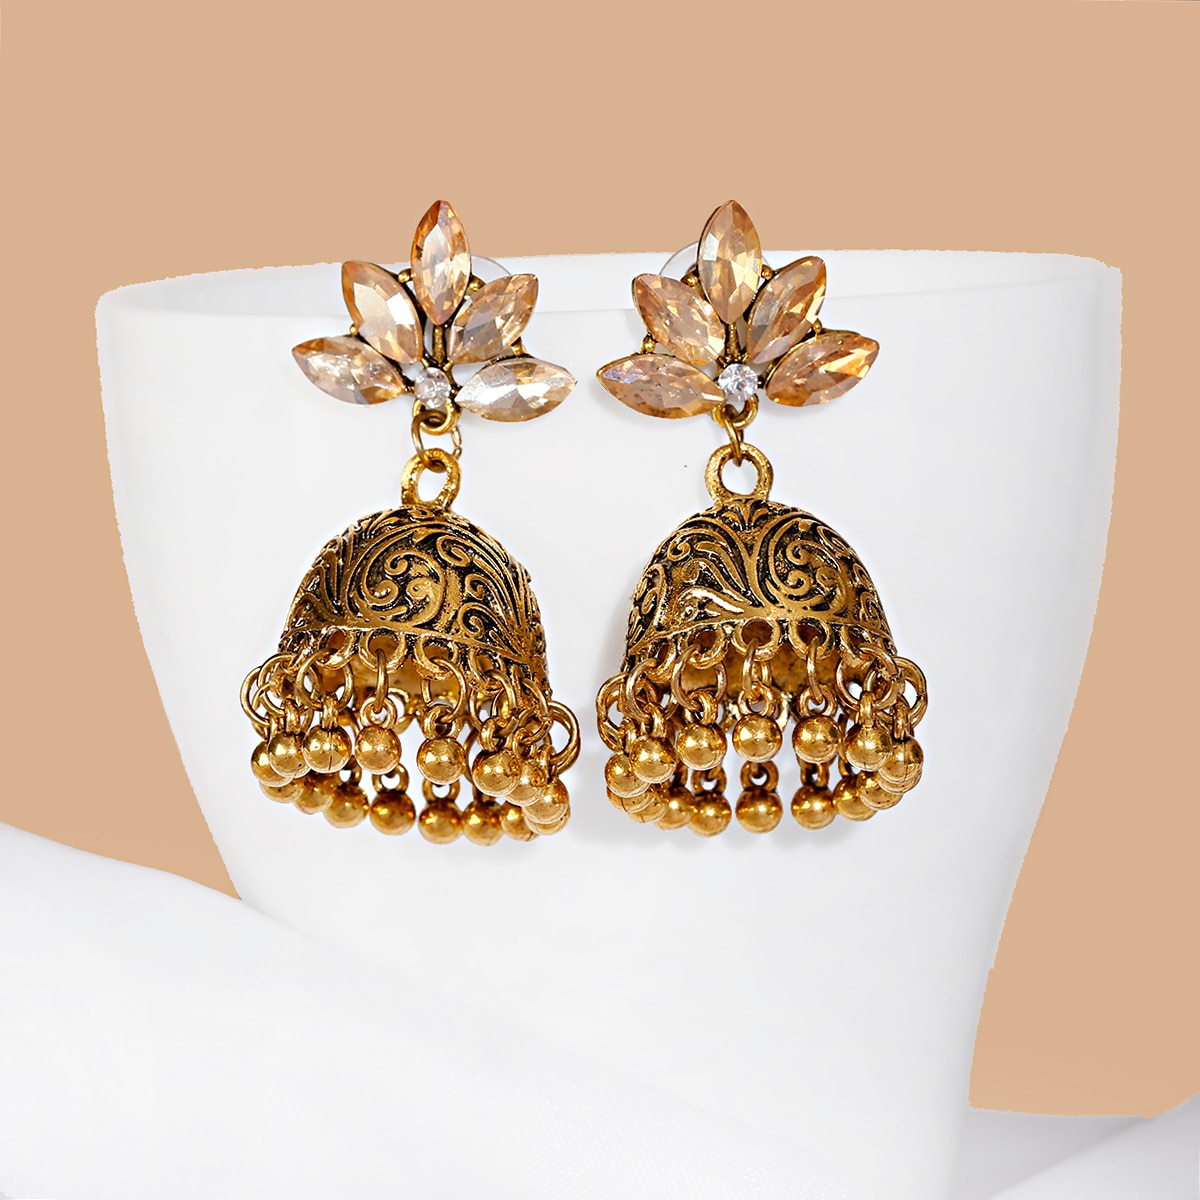 Luxury-Indian-Jhumka-Earrings-For-Women-Retro-Flower-Carved-CZ-Big-Bells-Tibetan-Earrings-Oorbellen-1005004770824397-5